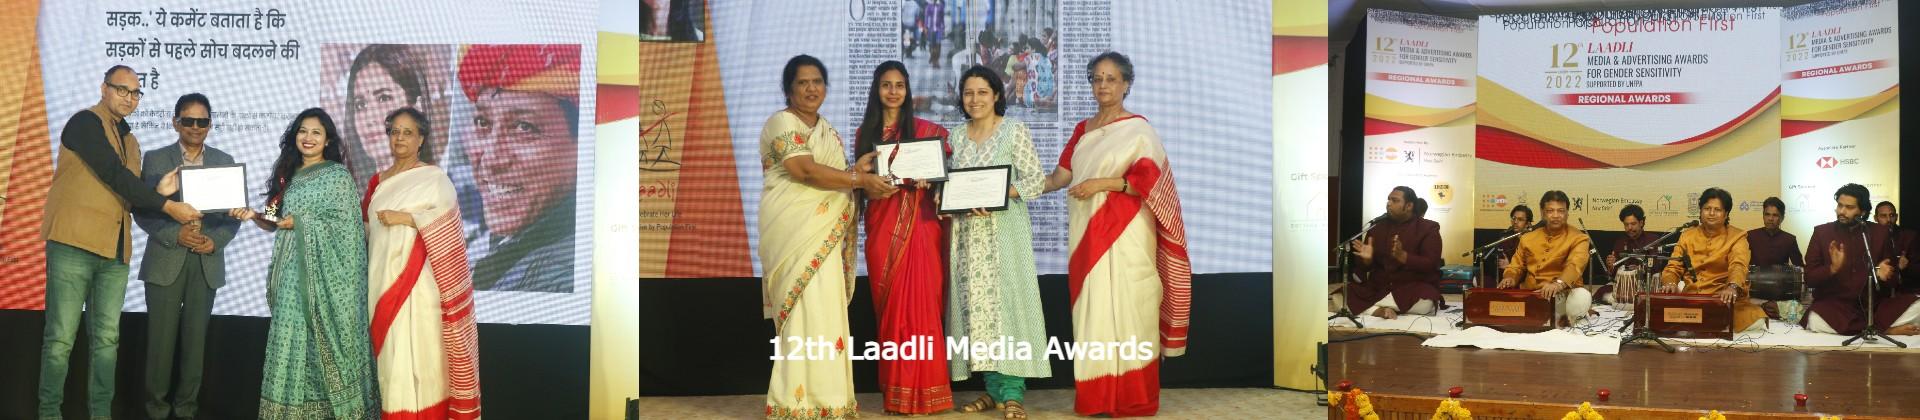 12th Laadli Awards